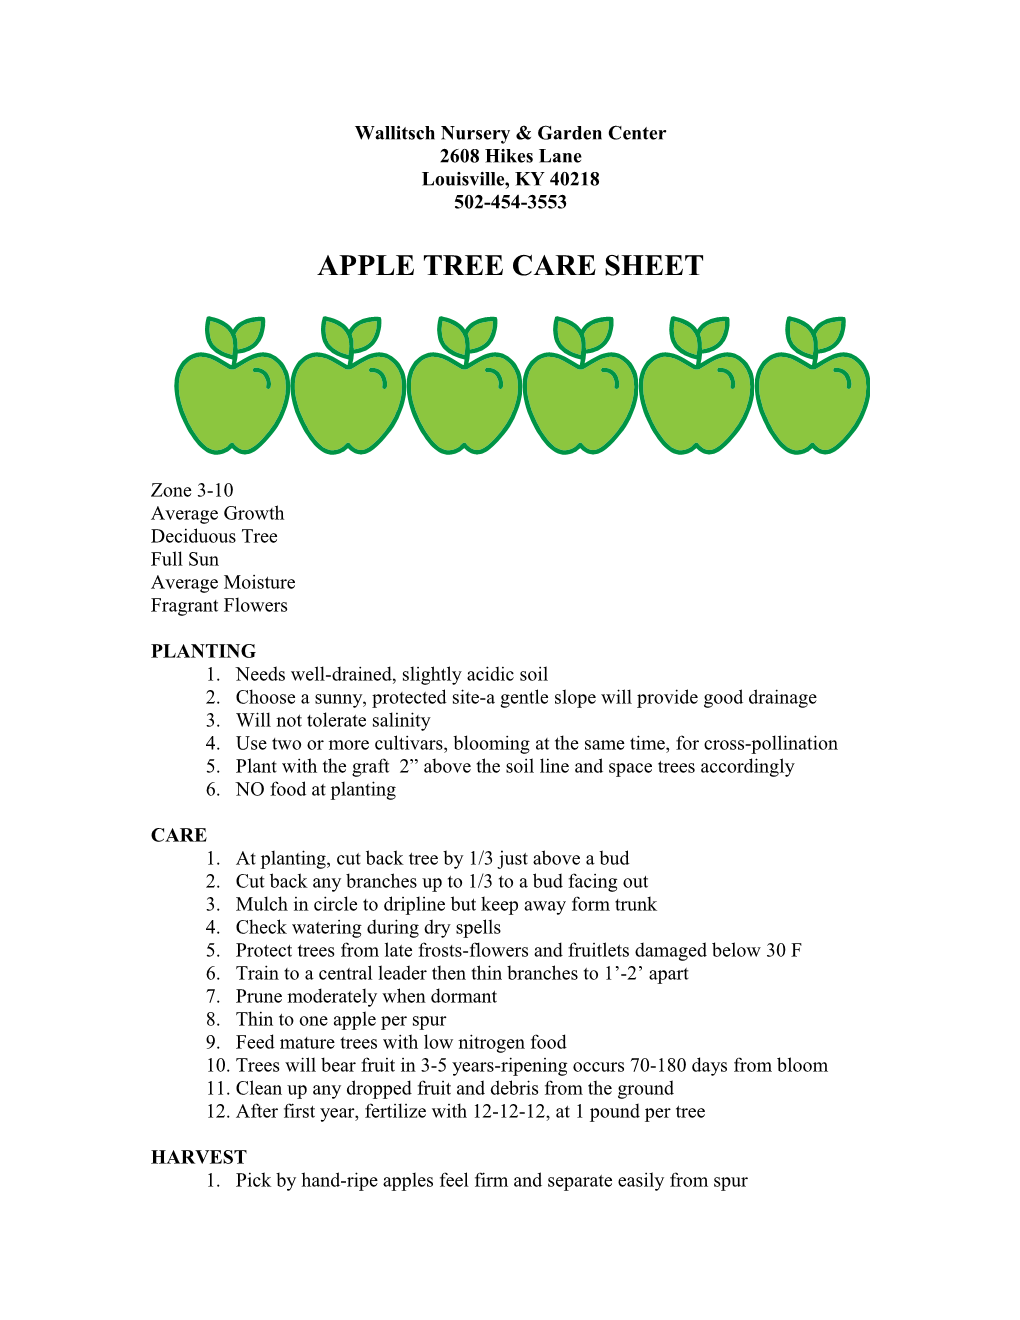 Apple Tree Care Sheet